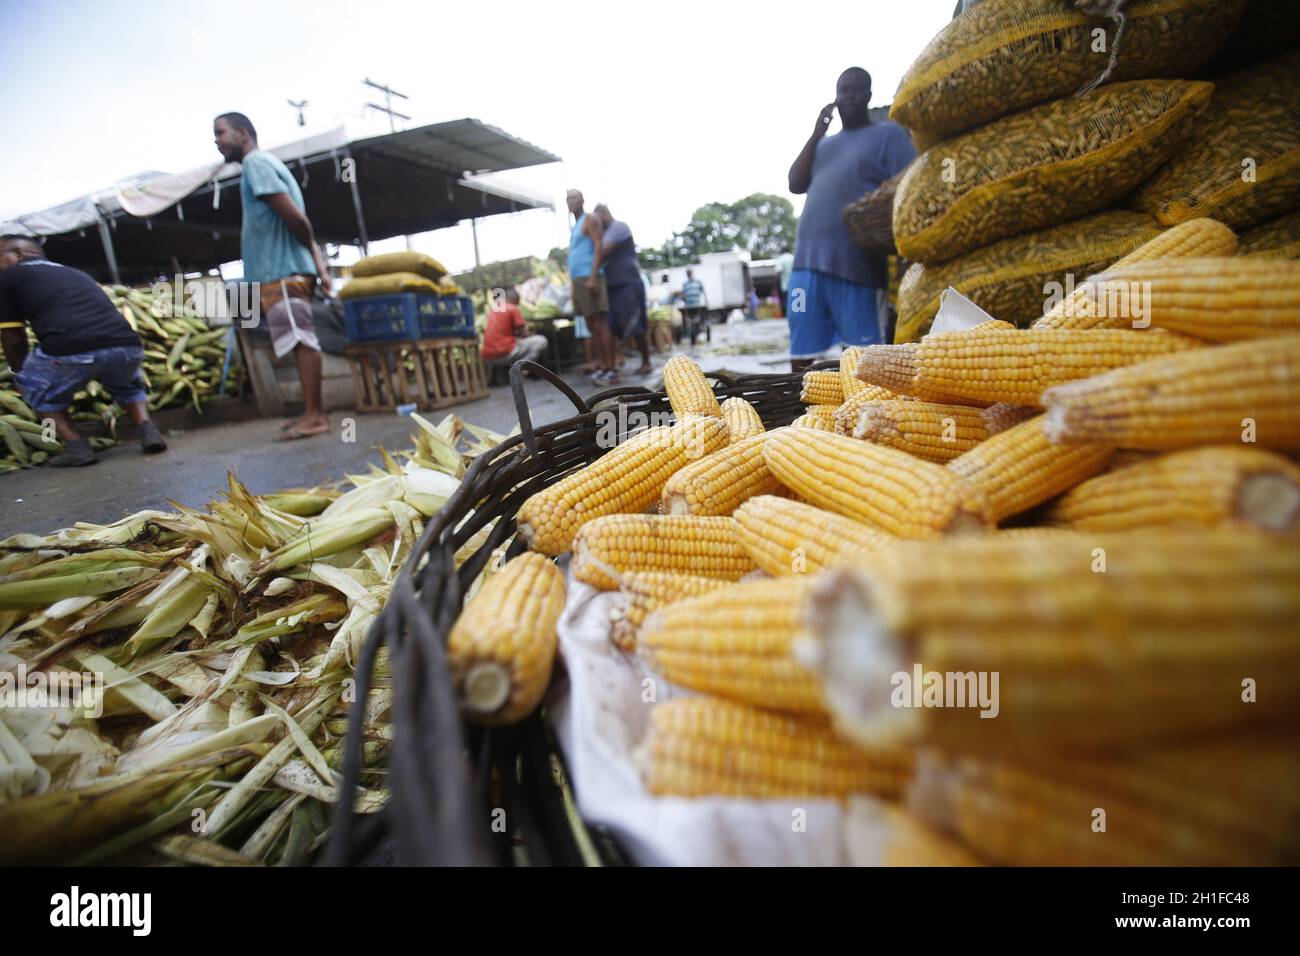 salvador, bahia / brazil - june 17, 2019: green corn for sale at the Feira de Sao Joaquim in the city of Salvador. *** Local Caption *** Stock Photo